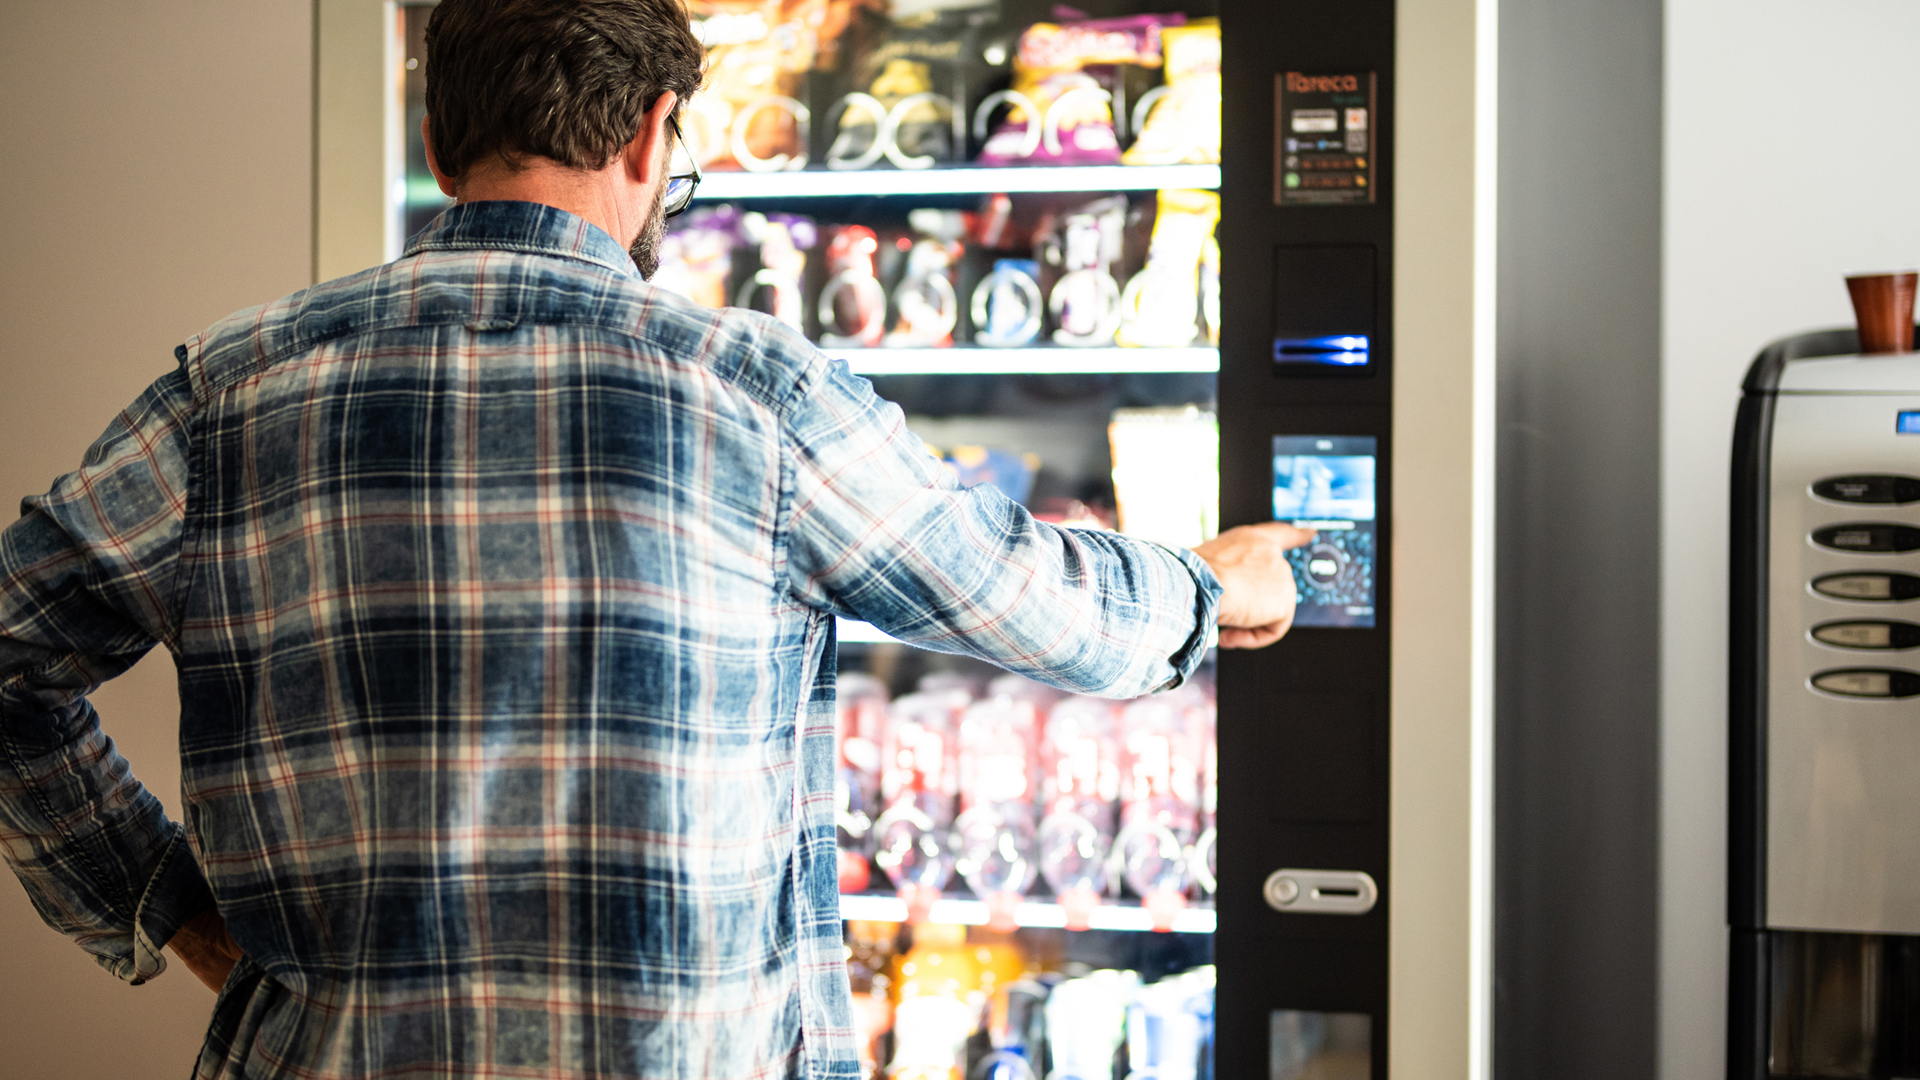 man in a checked shirt using a vending machine